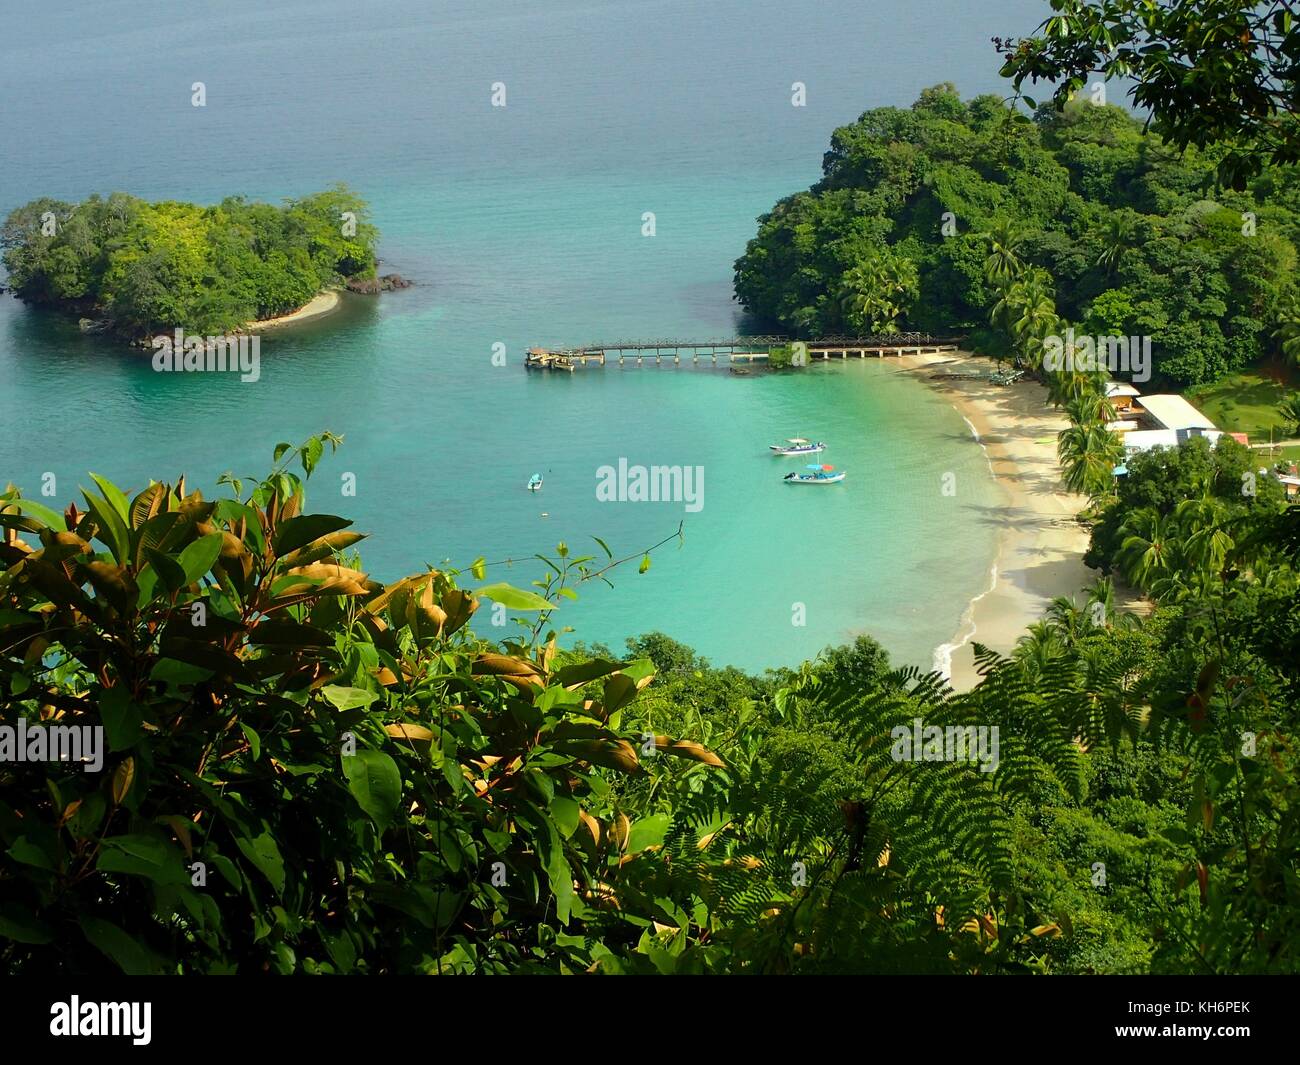 A view from elevatep point over beach in Parque Nacional de Isla Coiba, Panama. Stock Photo